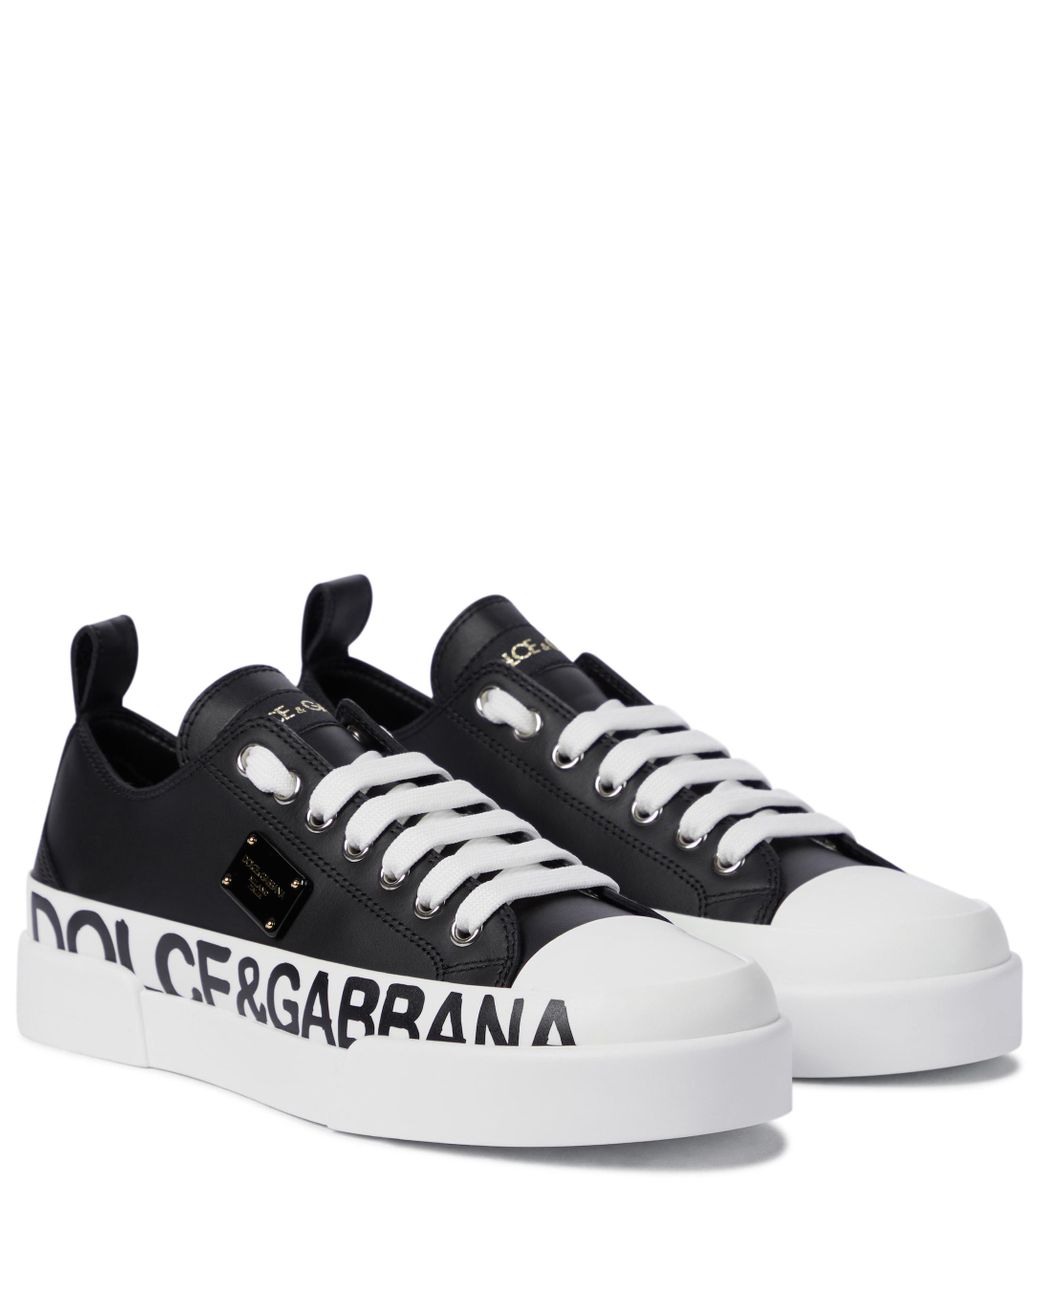 Dolce & Gabbana Portofino Leather Sneakers in Black - Lyst